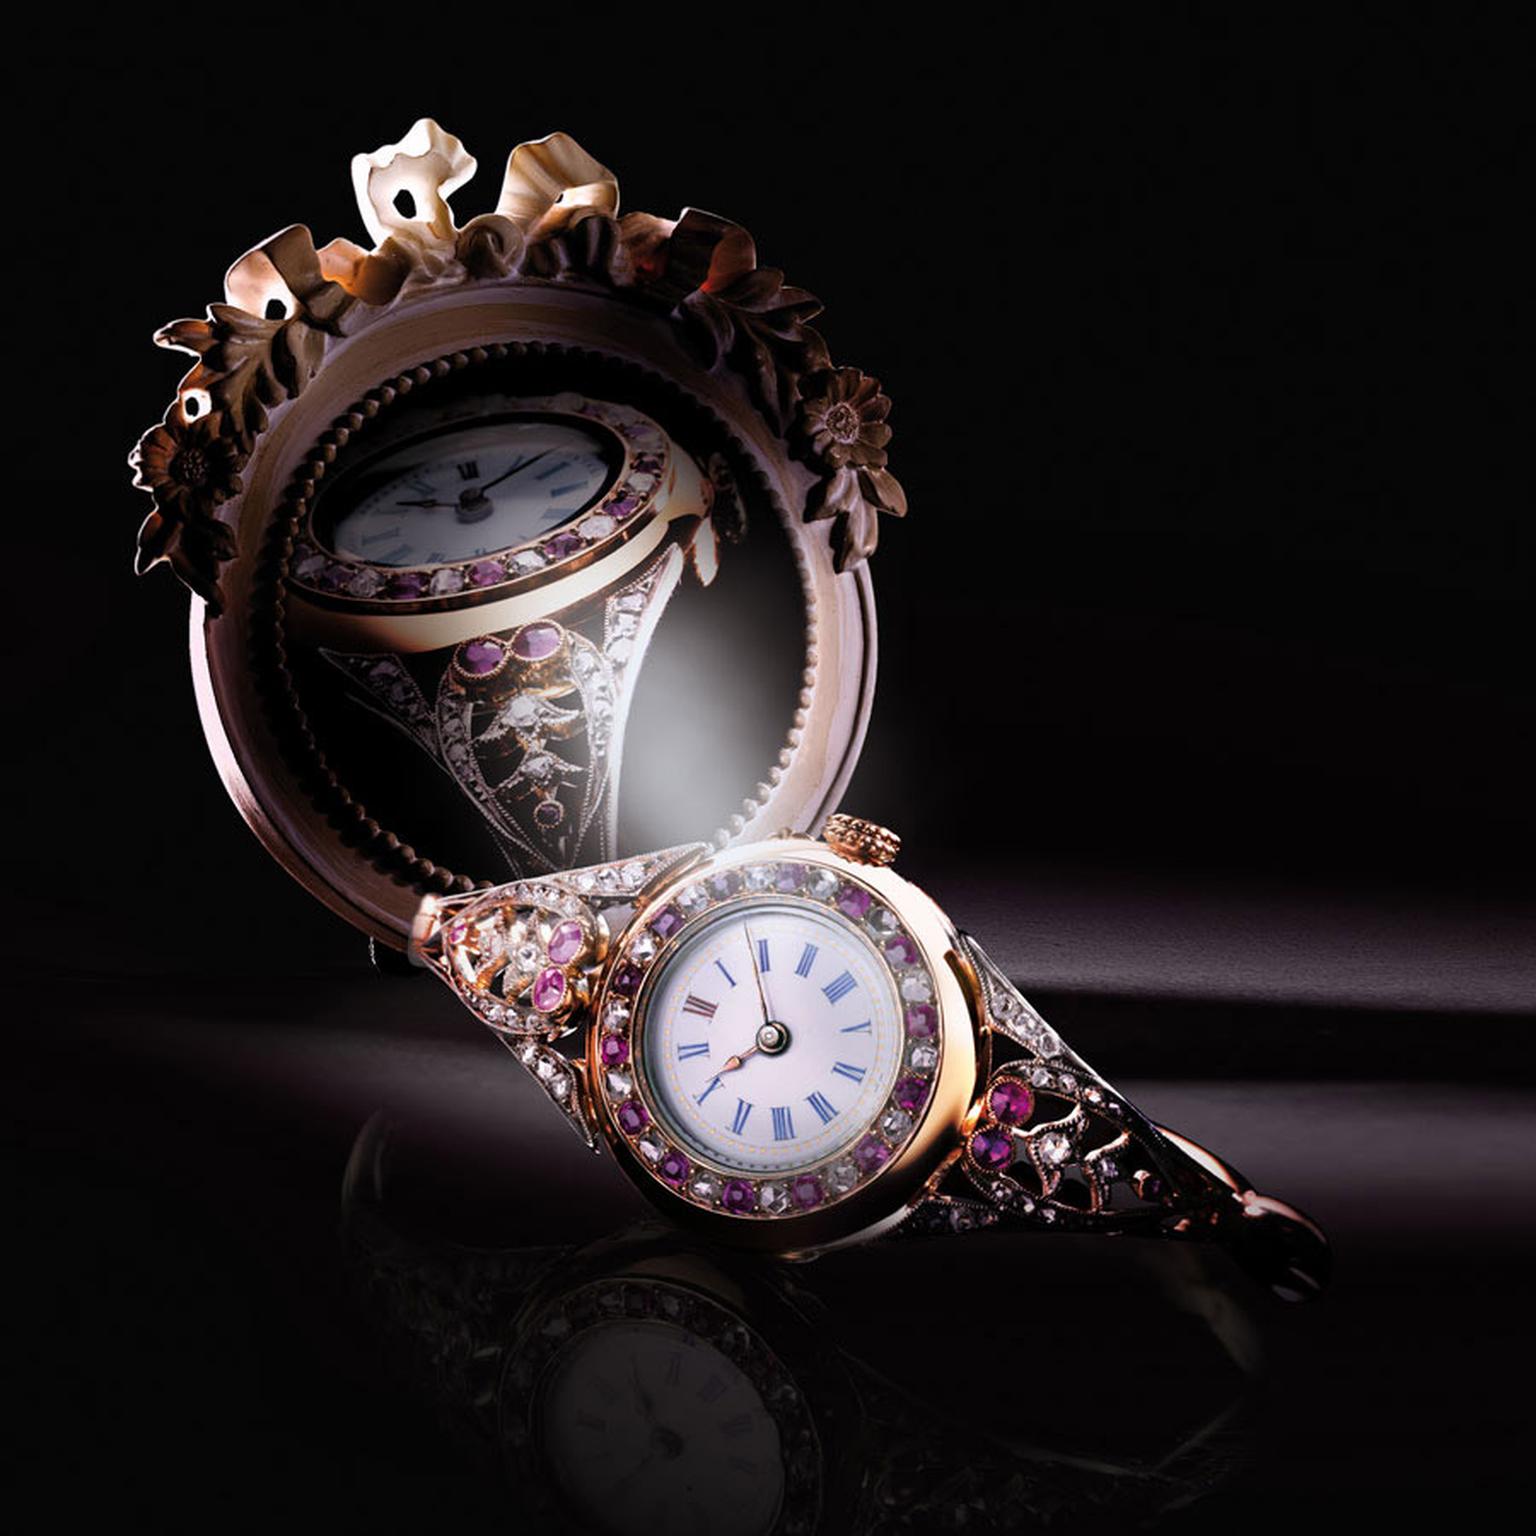 1900-Jaeger-LeCoultre-Lady-watch.jpg